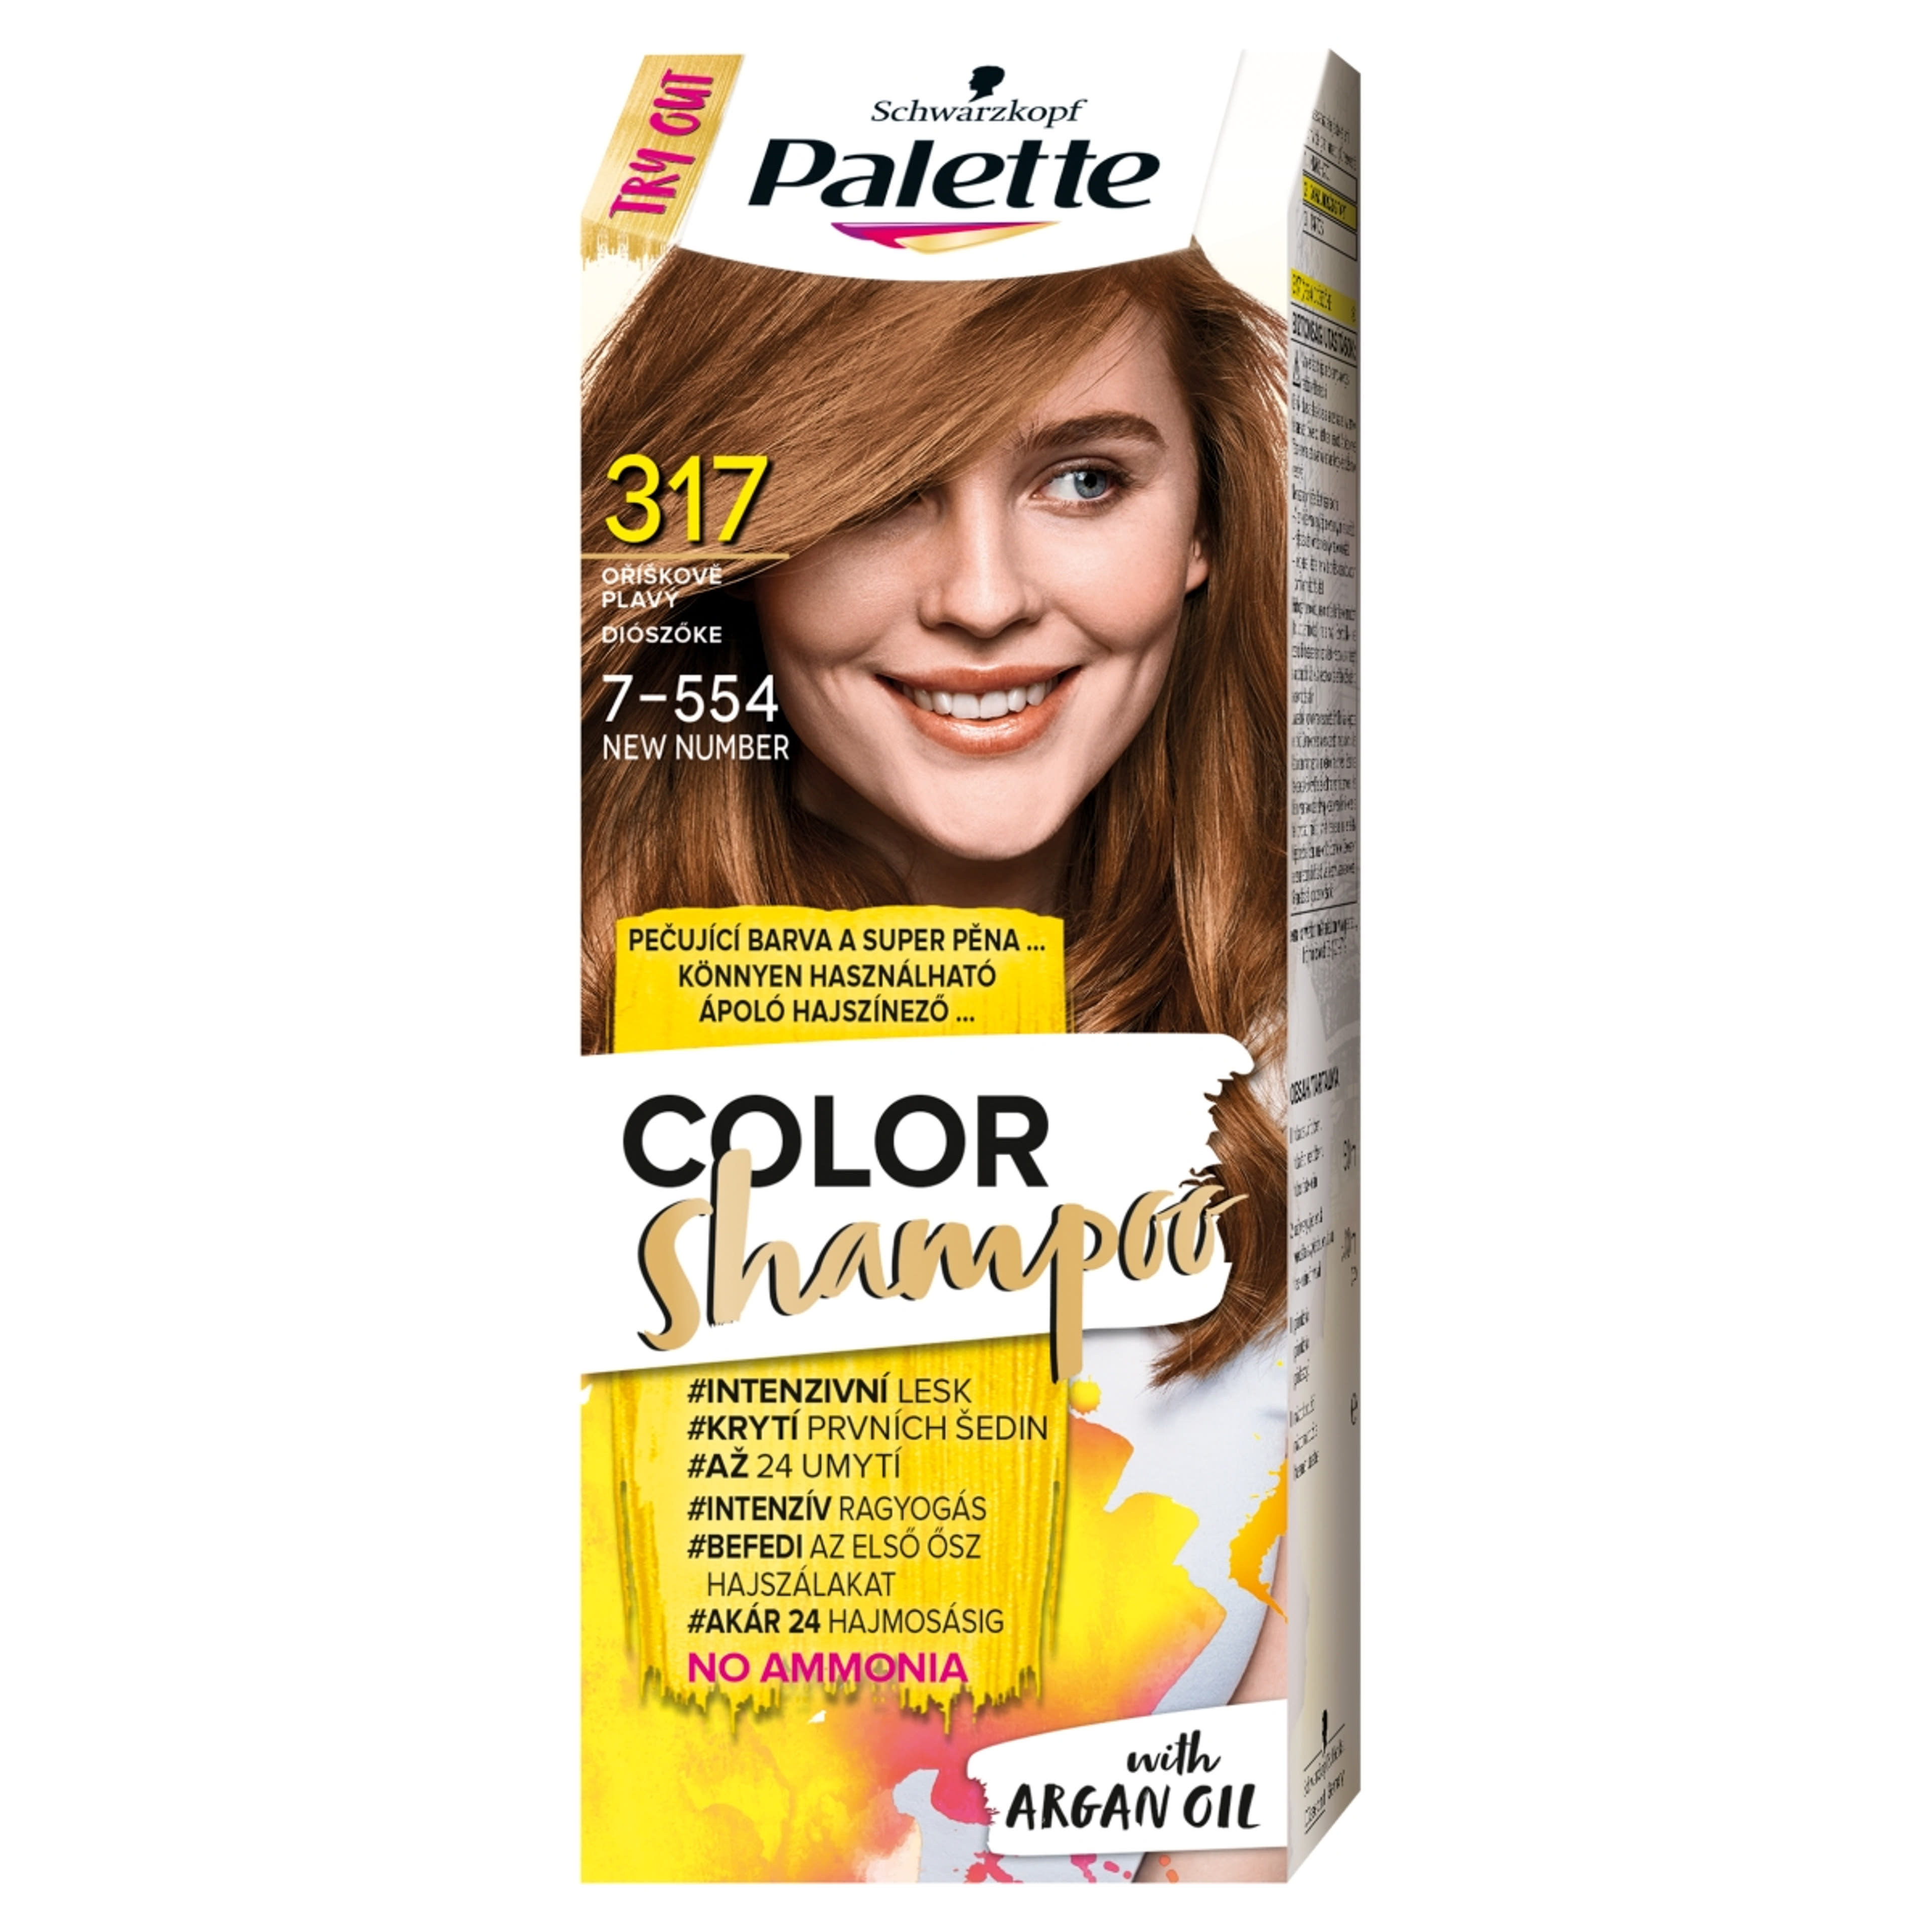 Schwarzkopf Palette Color Shampoo hajfesték 317 diószőke - 1 db